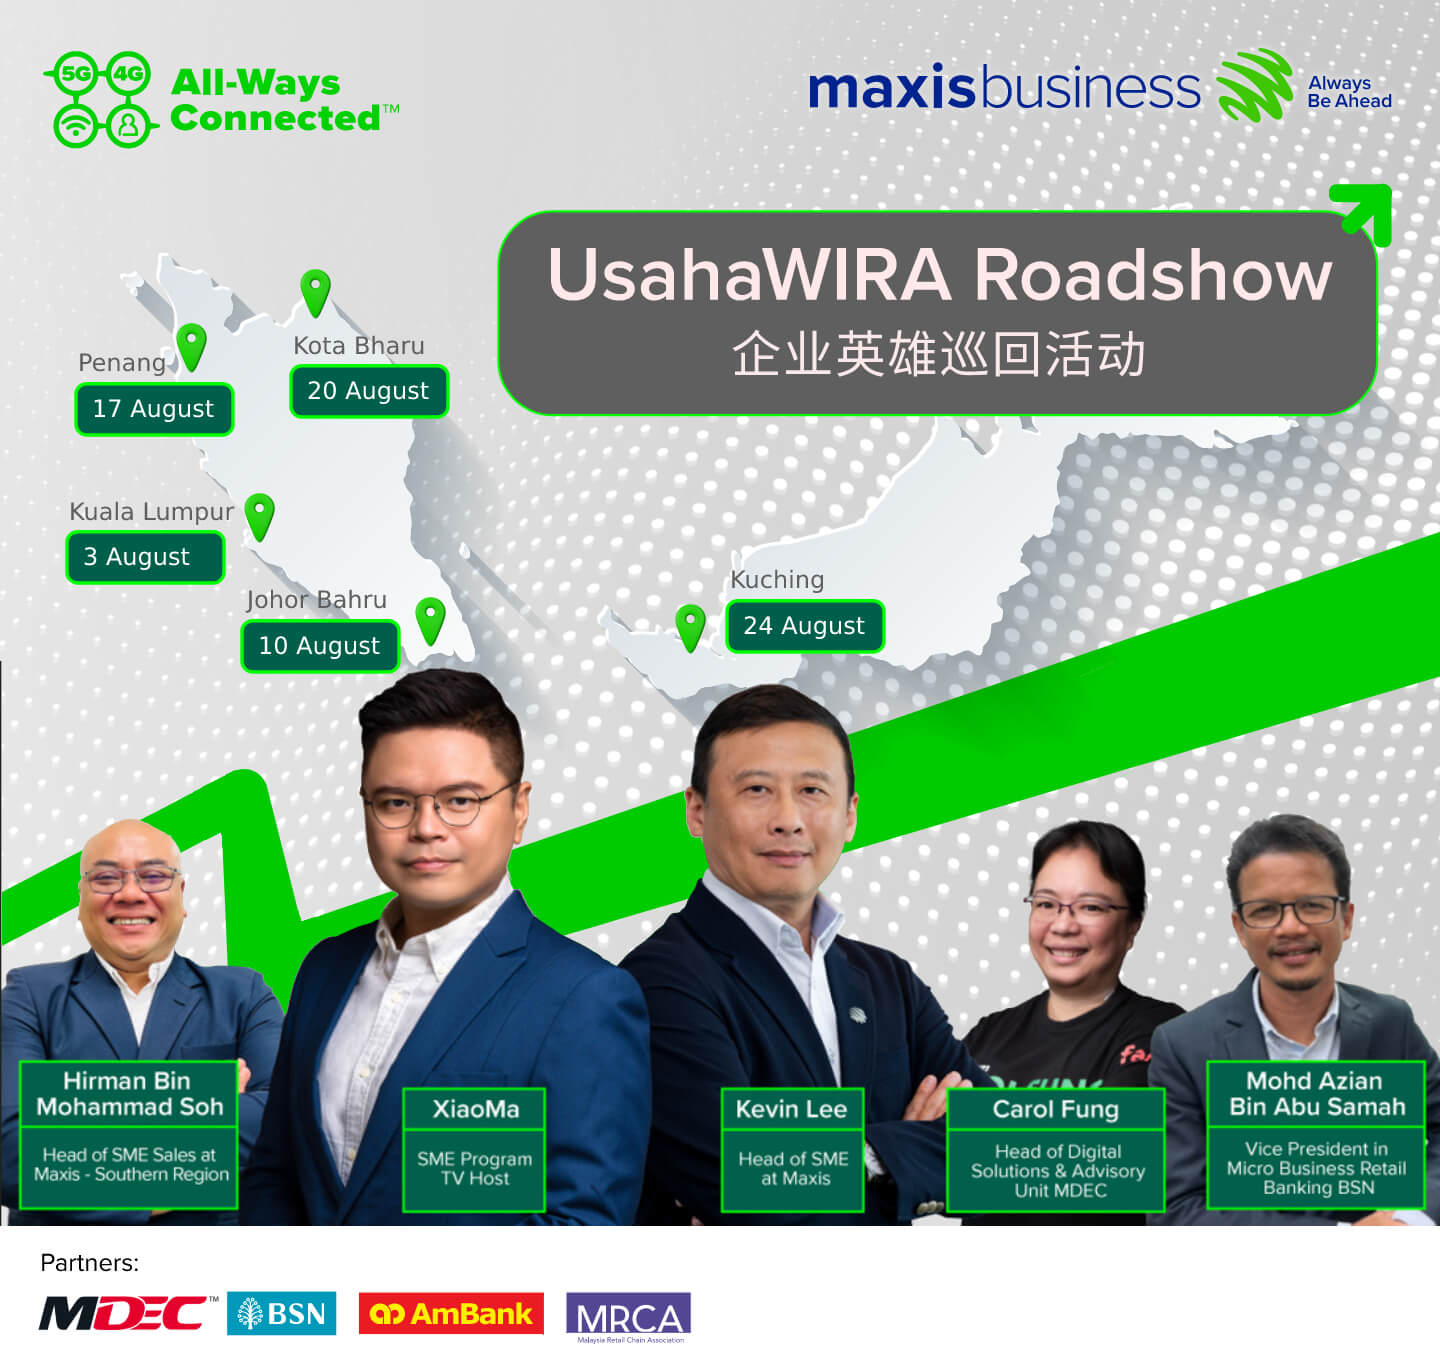 Maxis Business’ nationwide UsahaWIRA roadshow to help inspire SME digitalisation